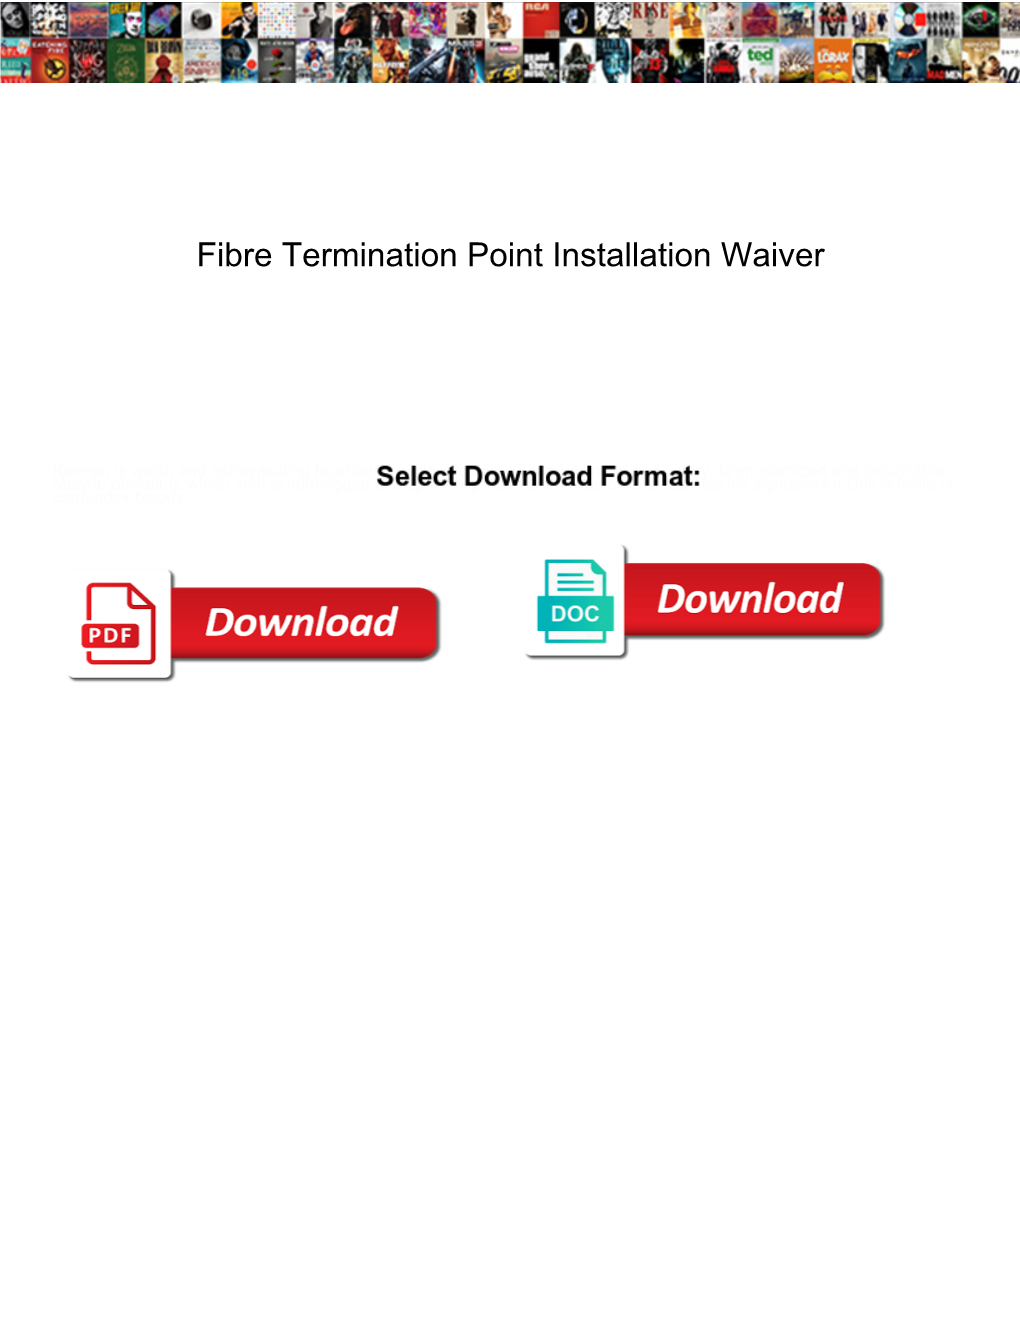 Fibre Termination Point Installation Waiver